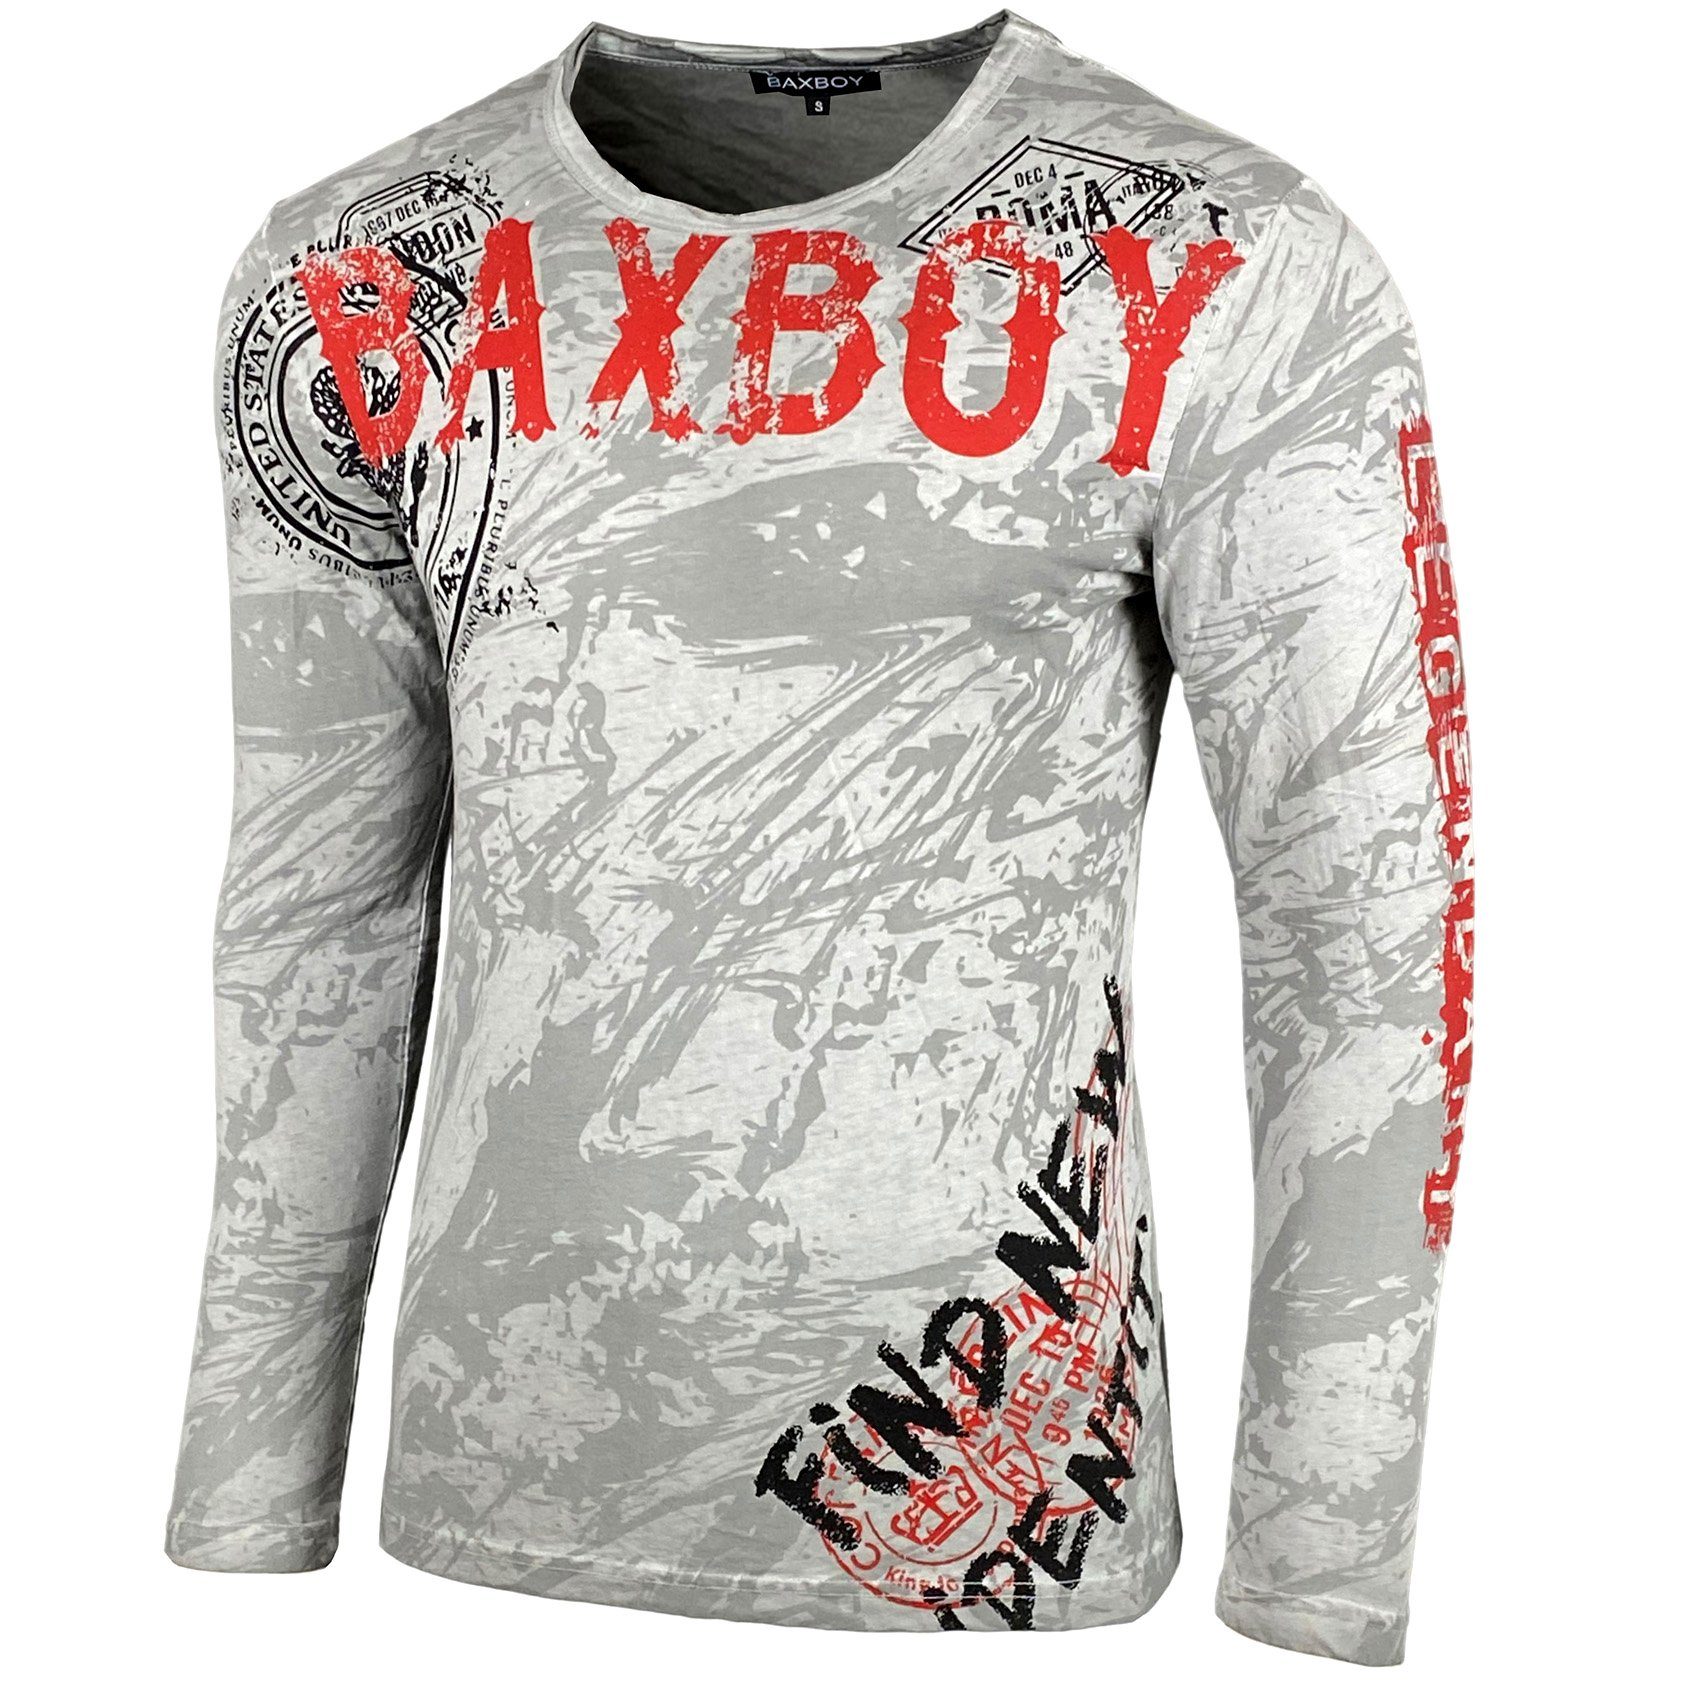 Baxboy Longshirt Baxboy Herren Longsleeve T-Shirt Moderner Männer Langarmshirt B-701 Grau